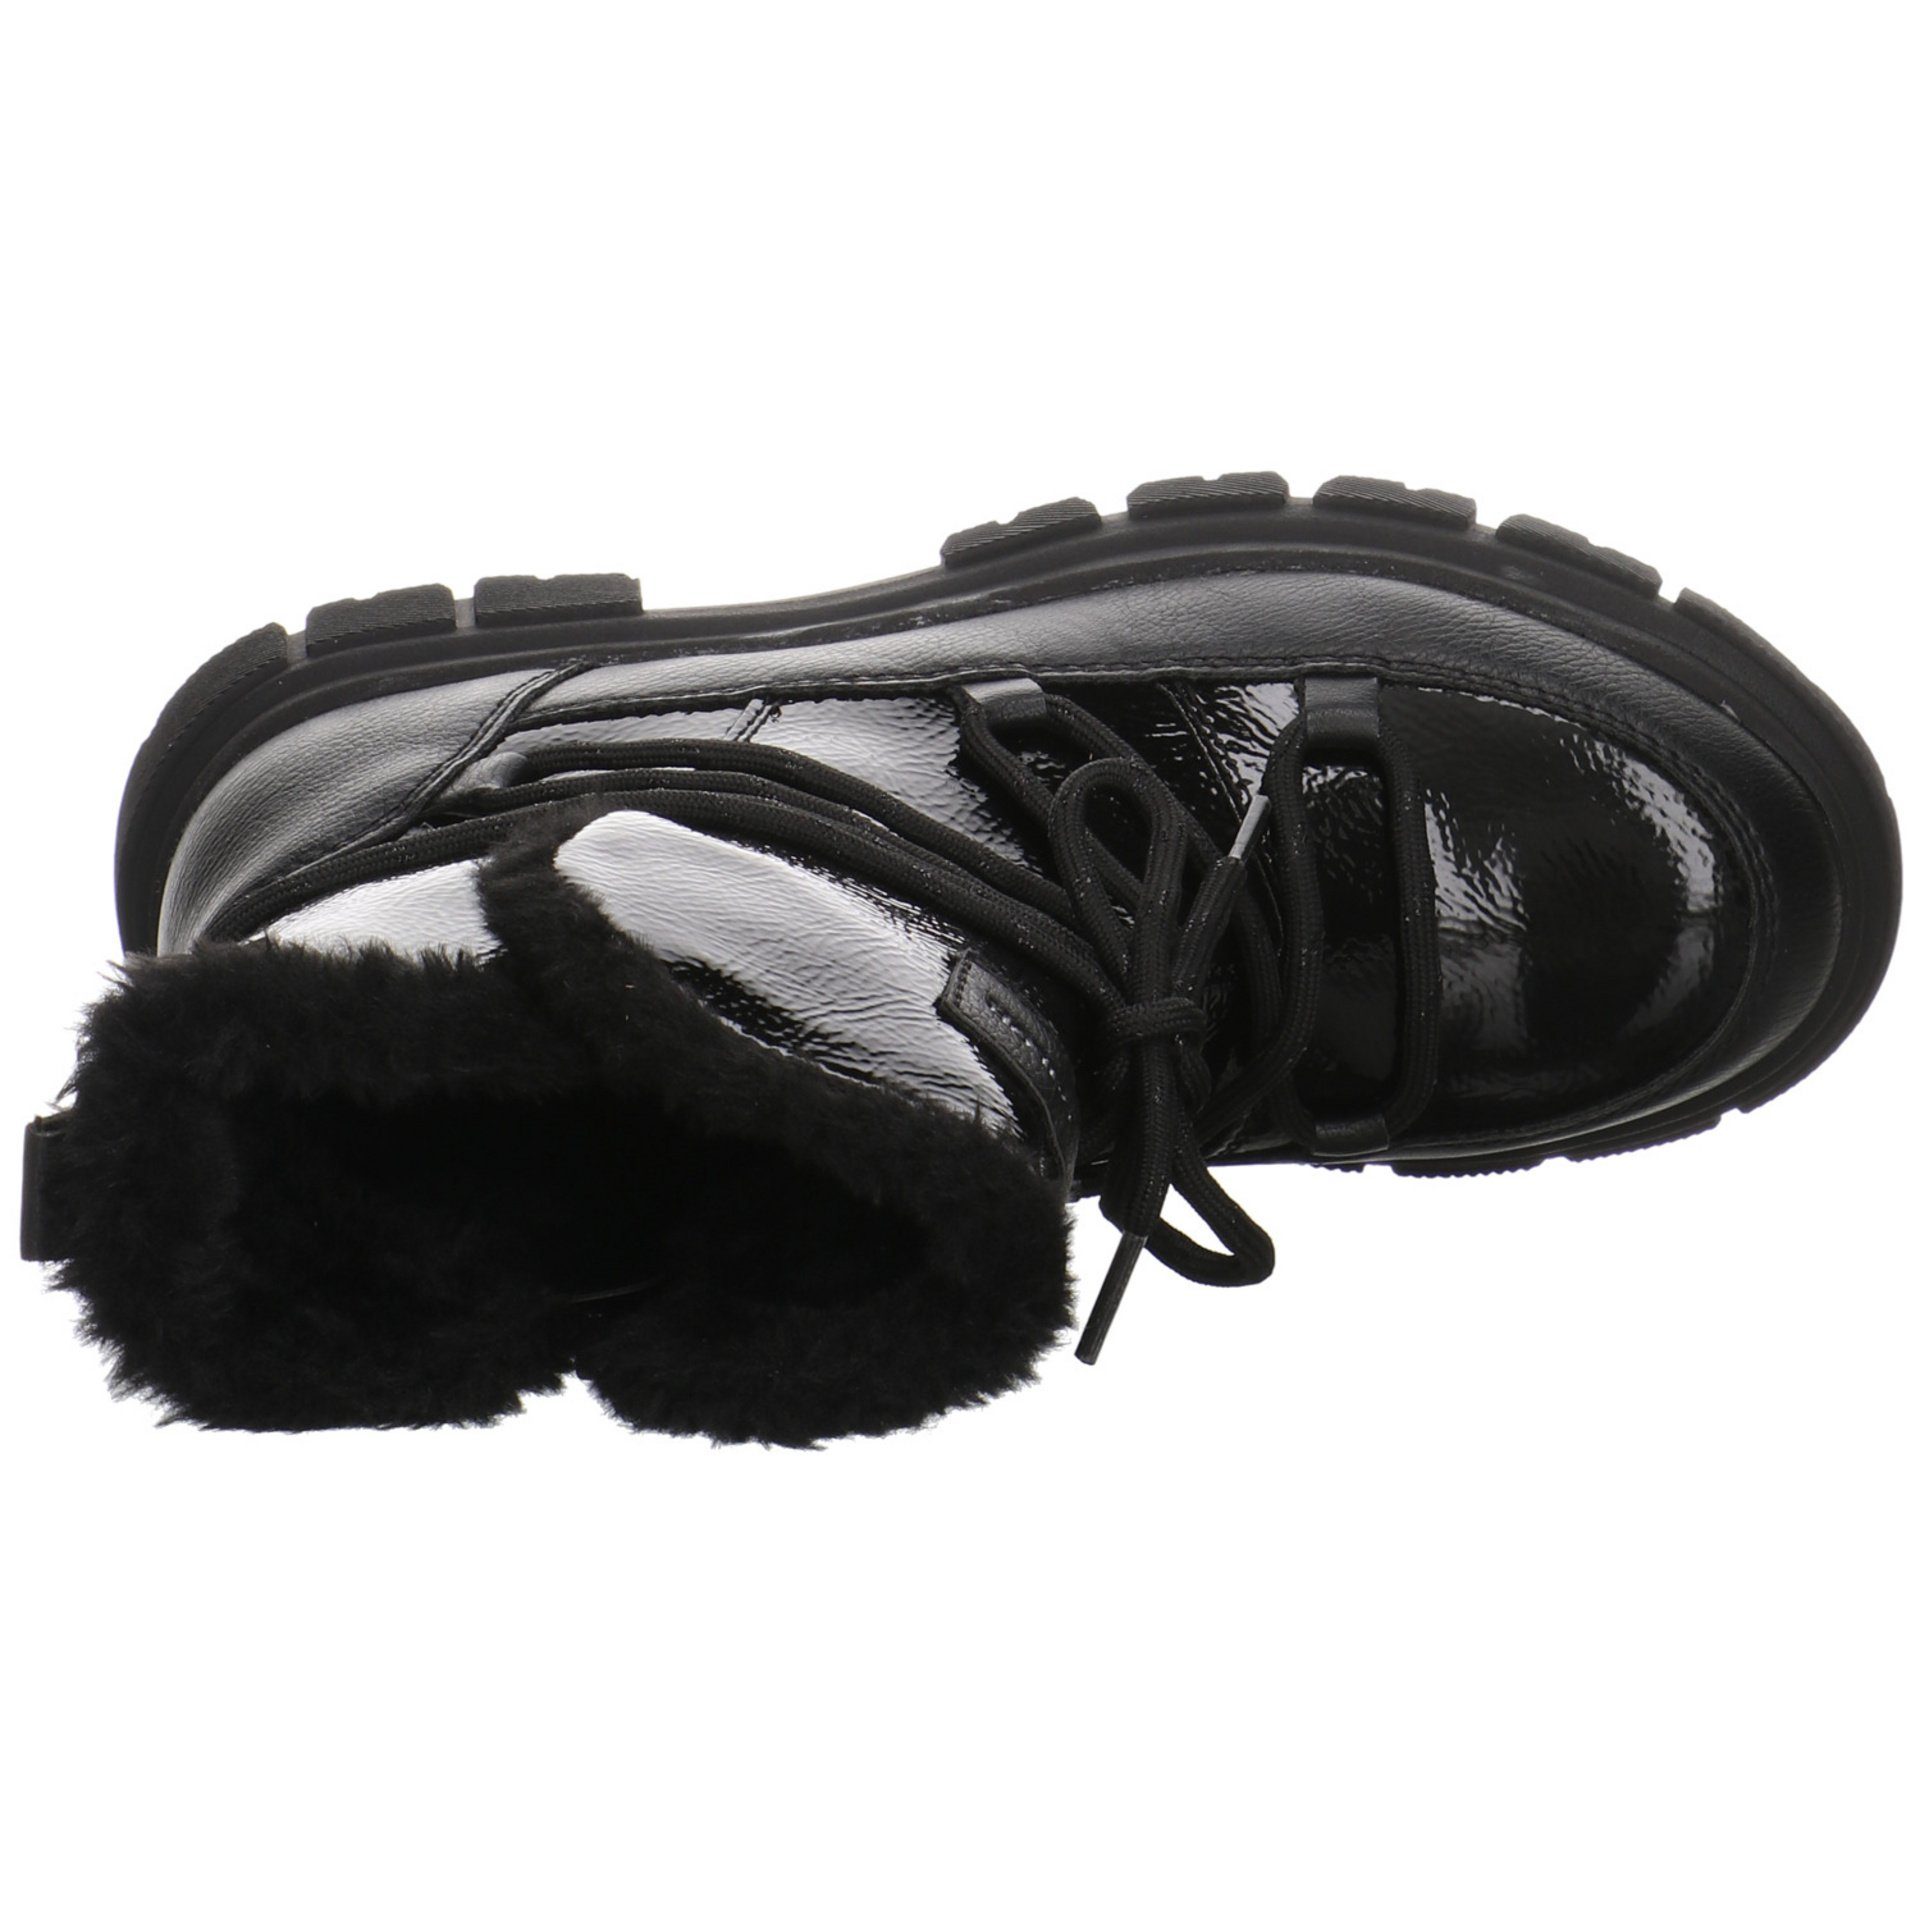 Stiefelette black Stiefel Kinderschuhe Schuhe Synthetikkombination TAILOR TOM Mädchen Boots